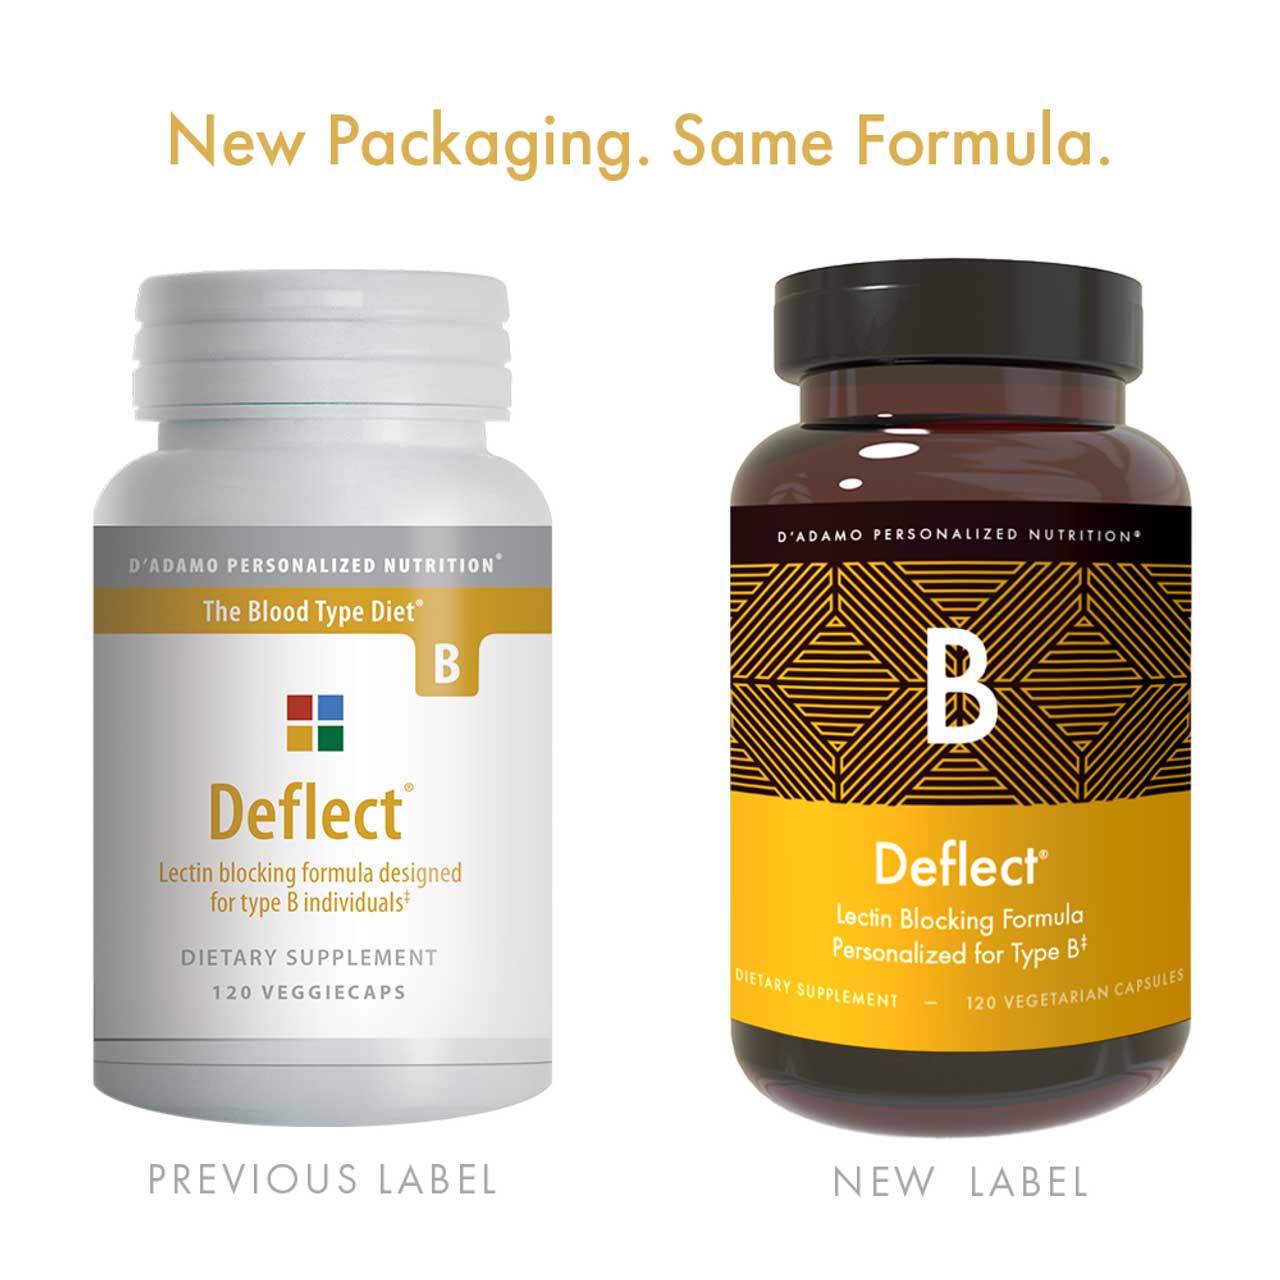 D'Adamo Personalized Nutrition Deflect B New Label